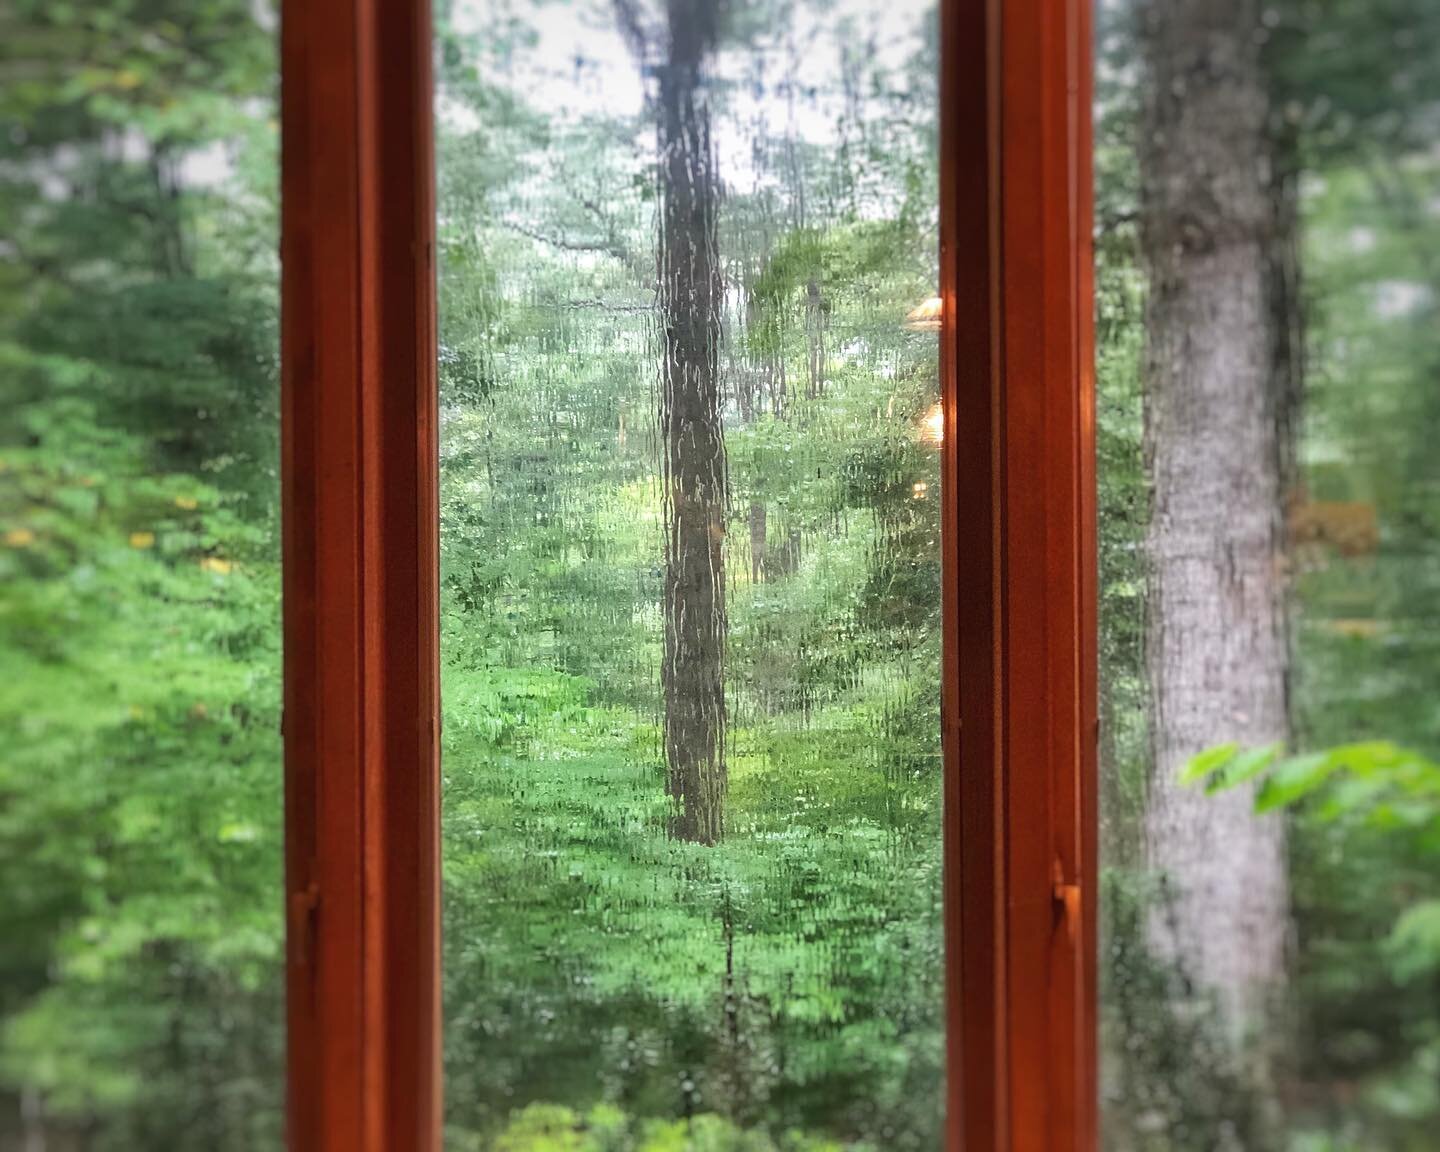 I love how rain creates a painterly view out my window. #windowview #insideout #painterly #window #nature #rain #trees #forest #saddleridgesanctuary #unitedplantsaversbotanicalsanctuary